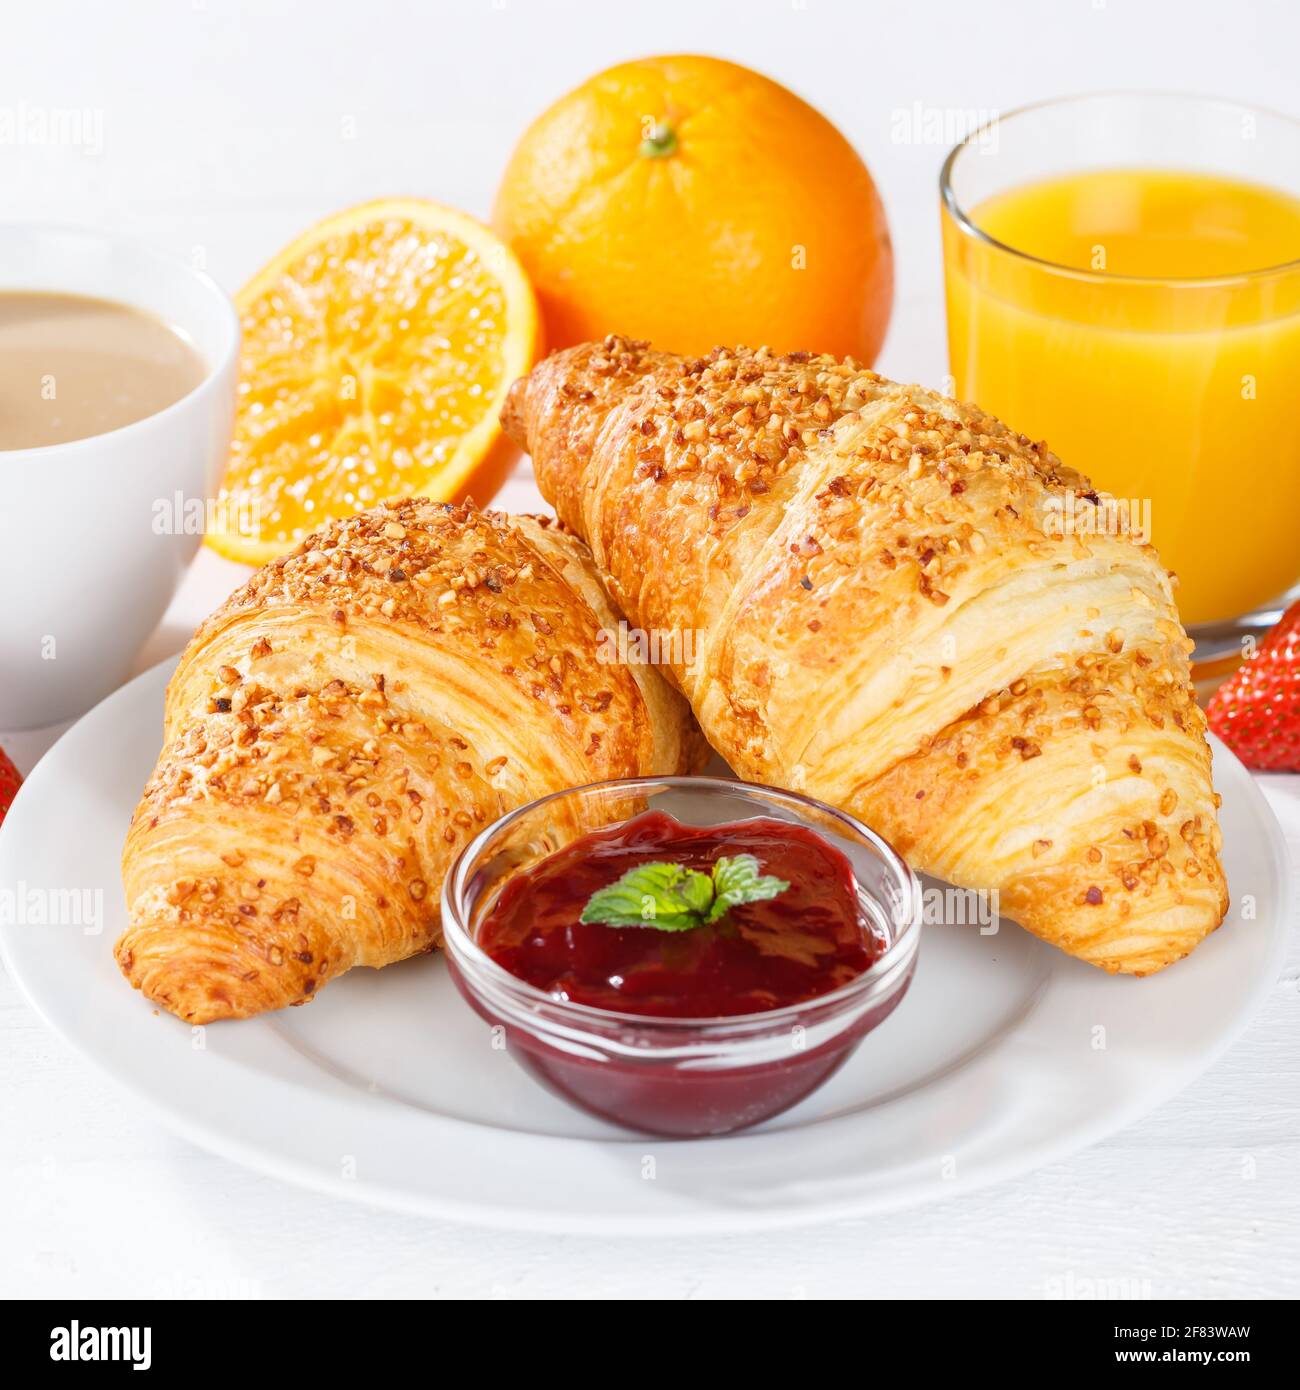 Croissant breakfast croissants orange juice coffee food hotel buffet jam square marmelade Stock Photo